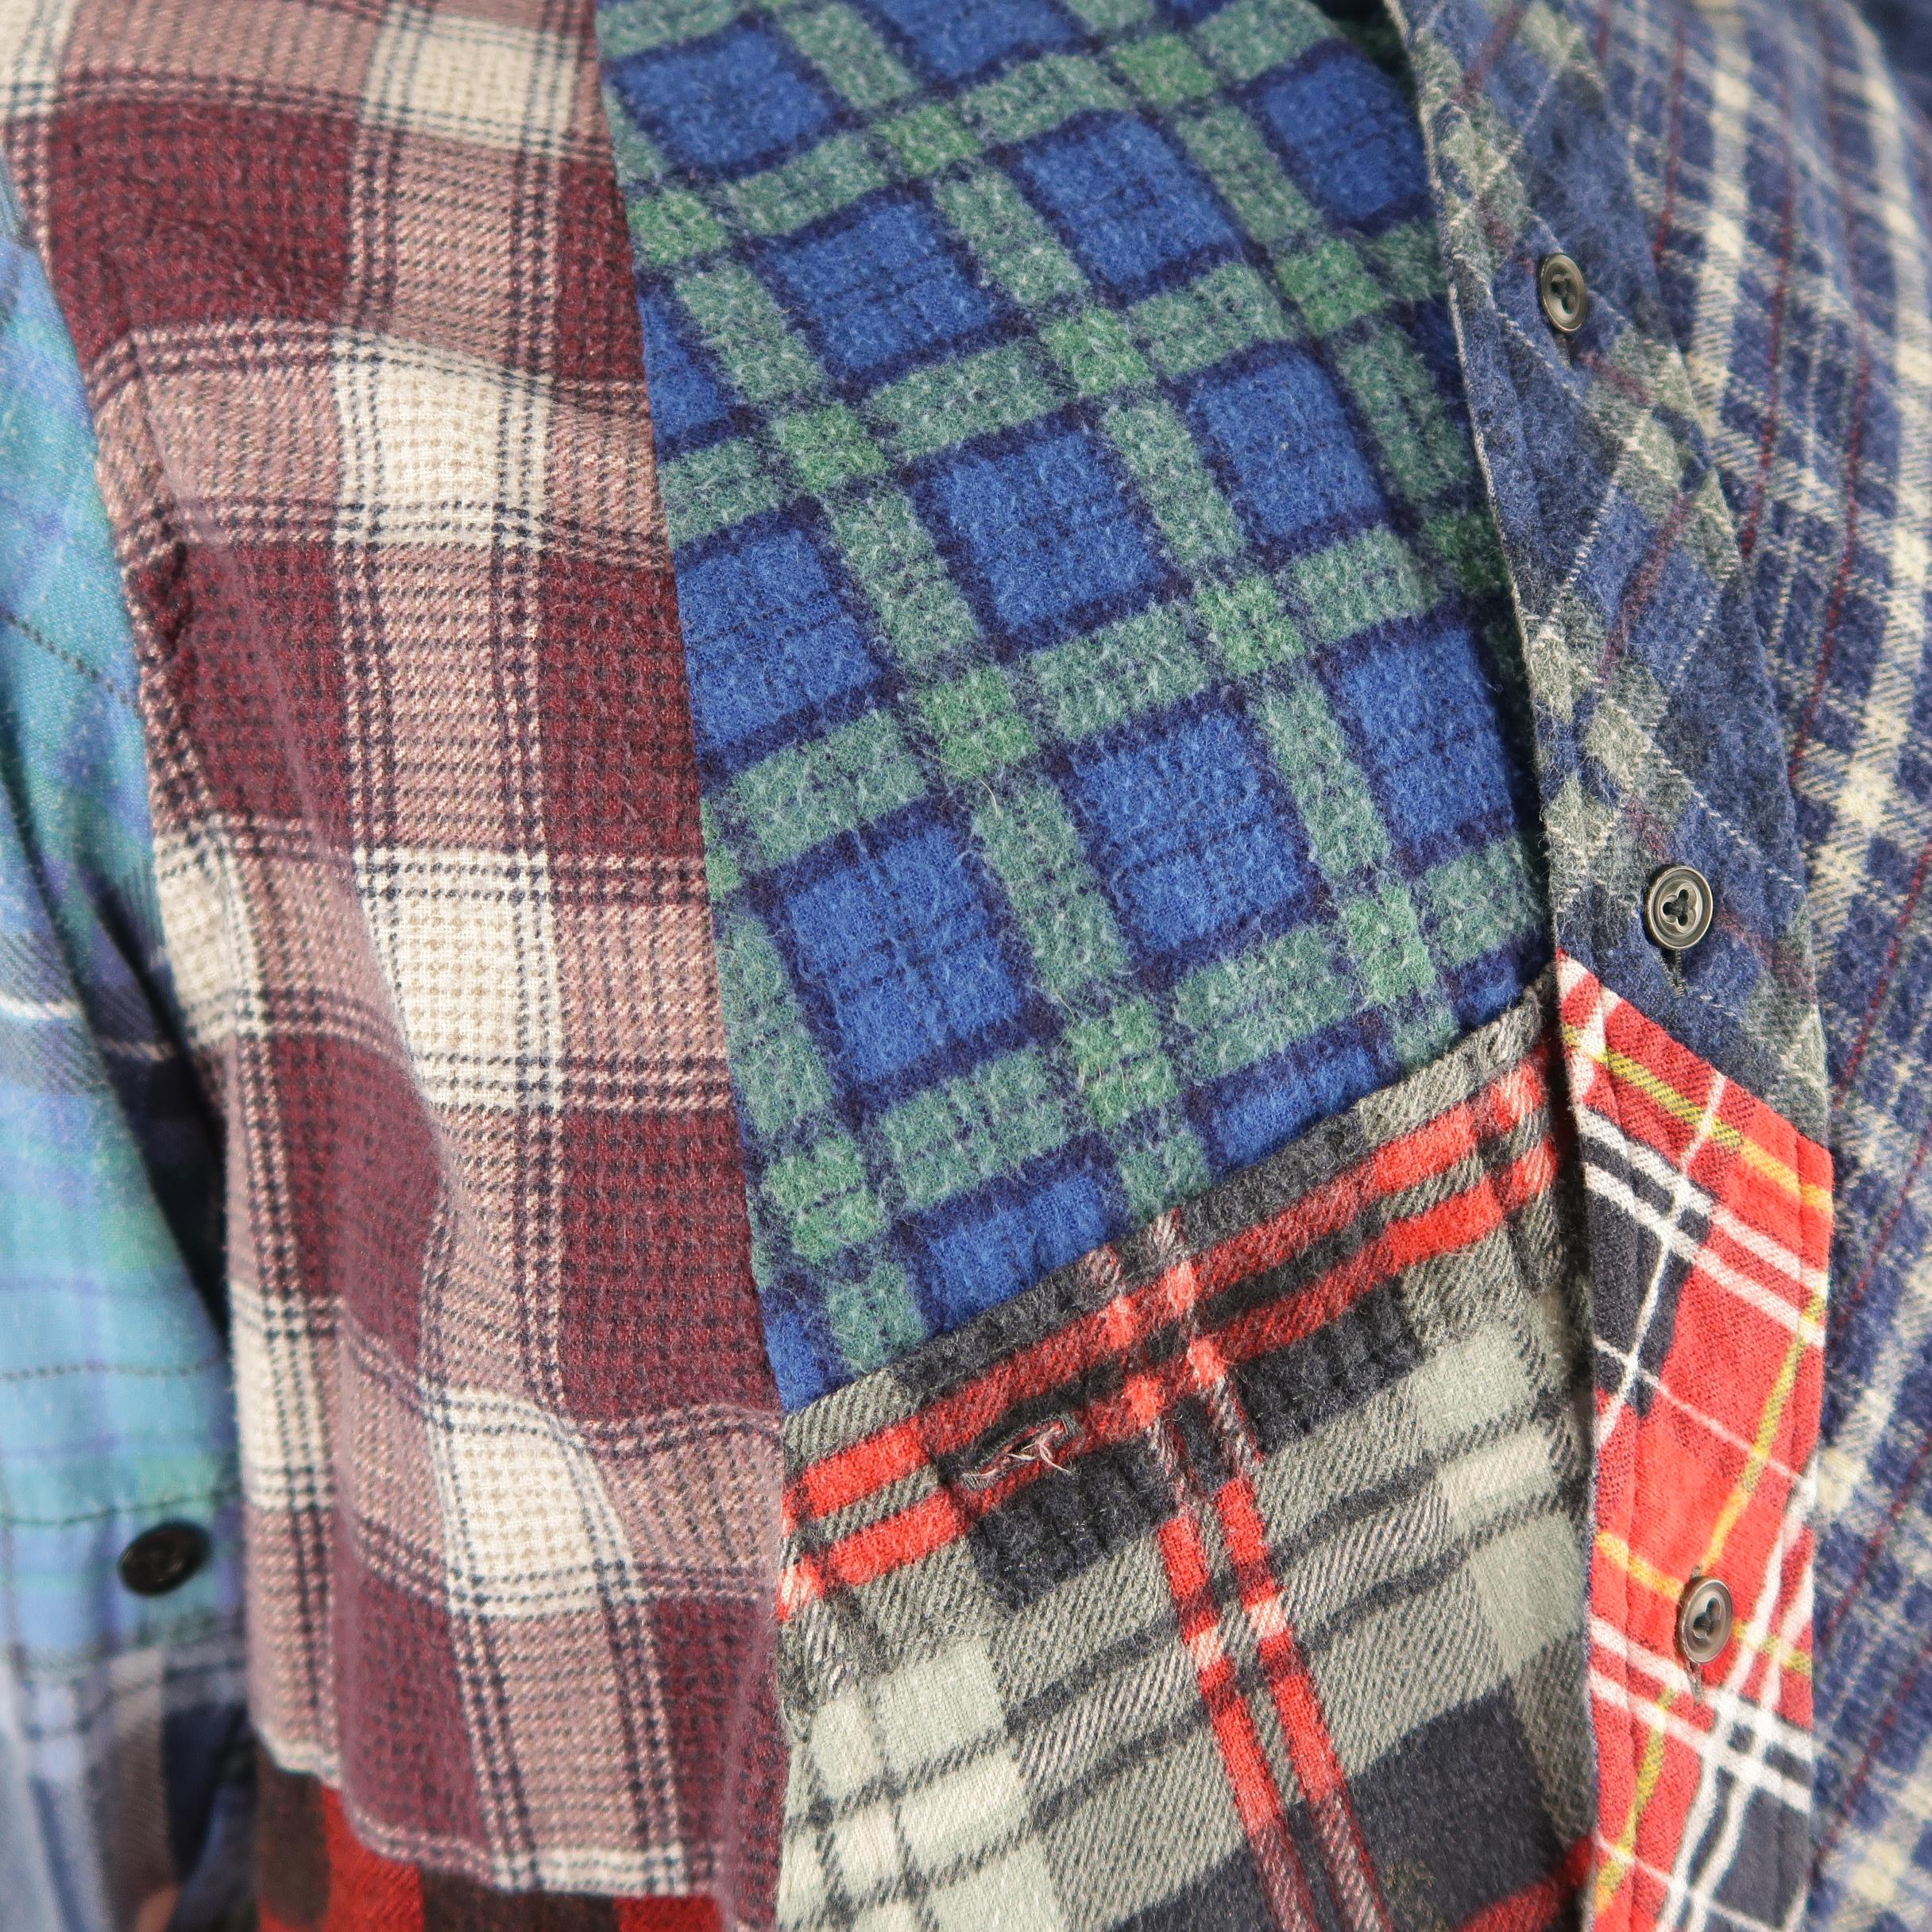 patchwork flannel shirt